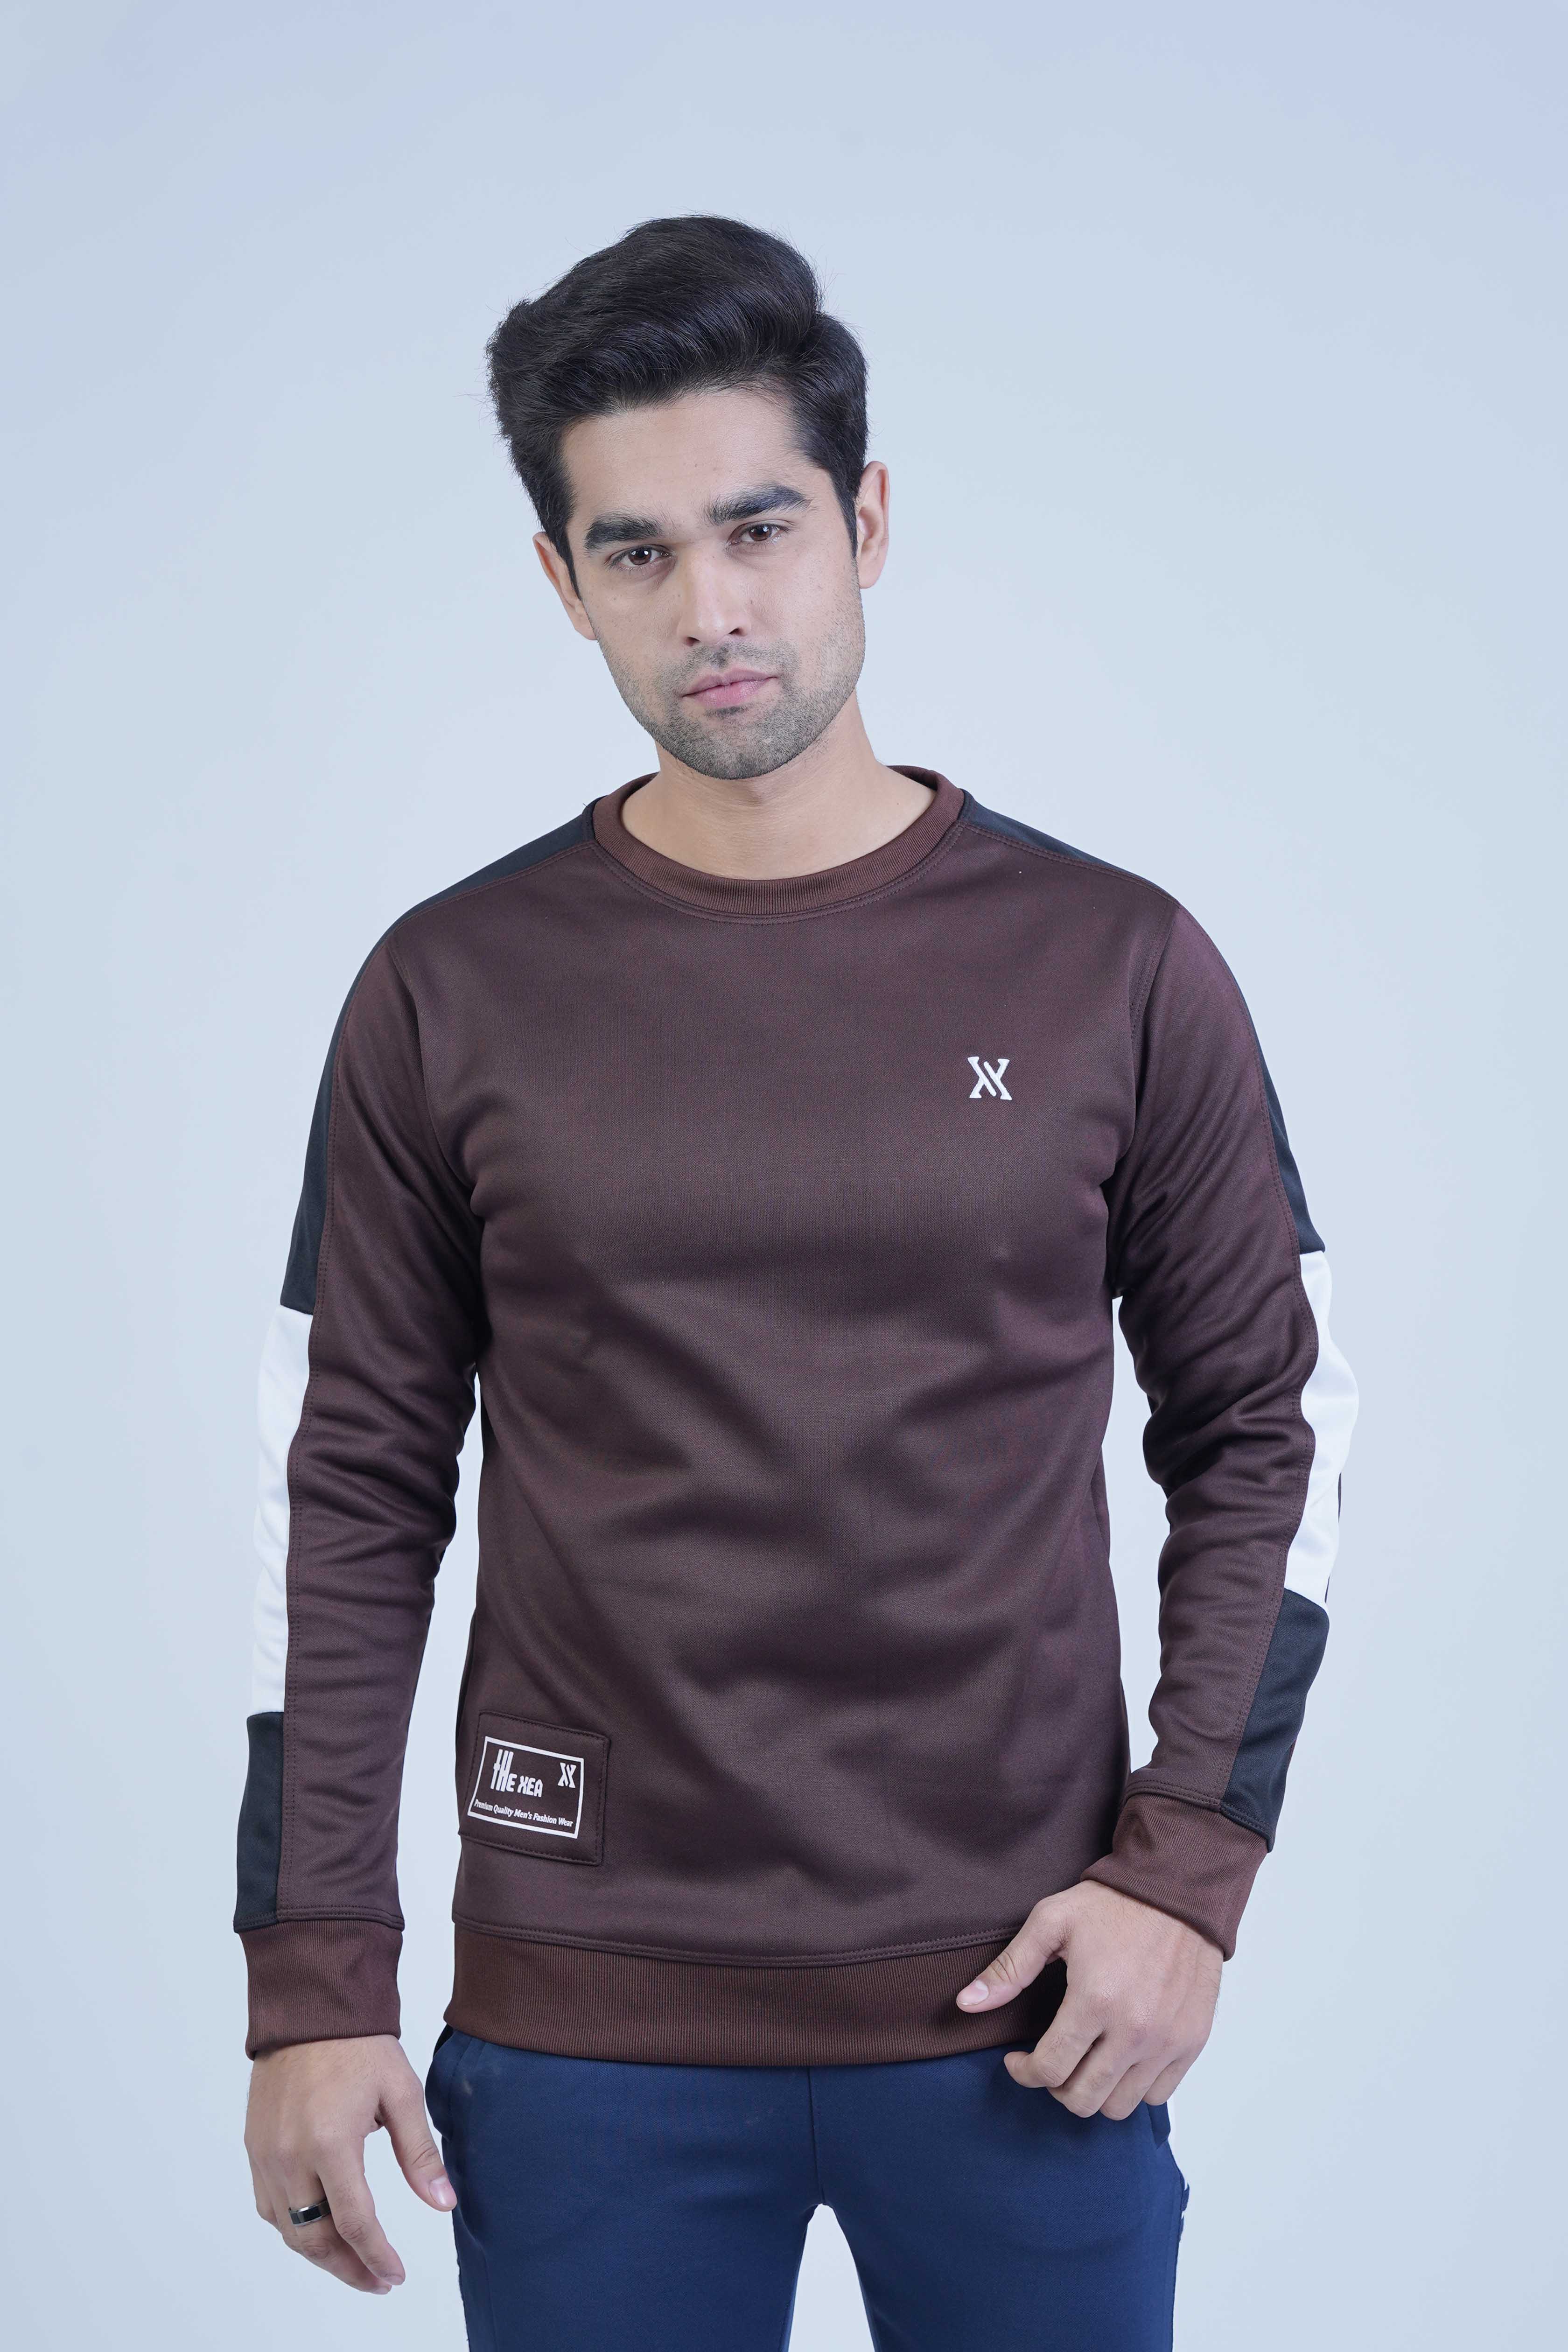 Eco Smart Brown Sweatshirt - The Xea Men's Clothing